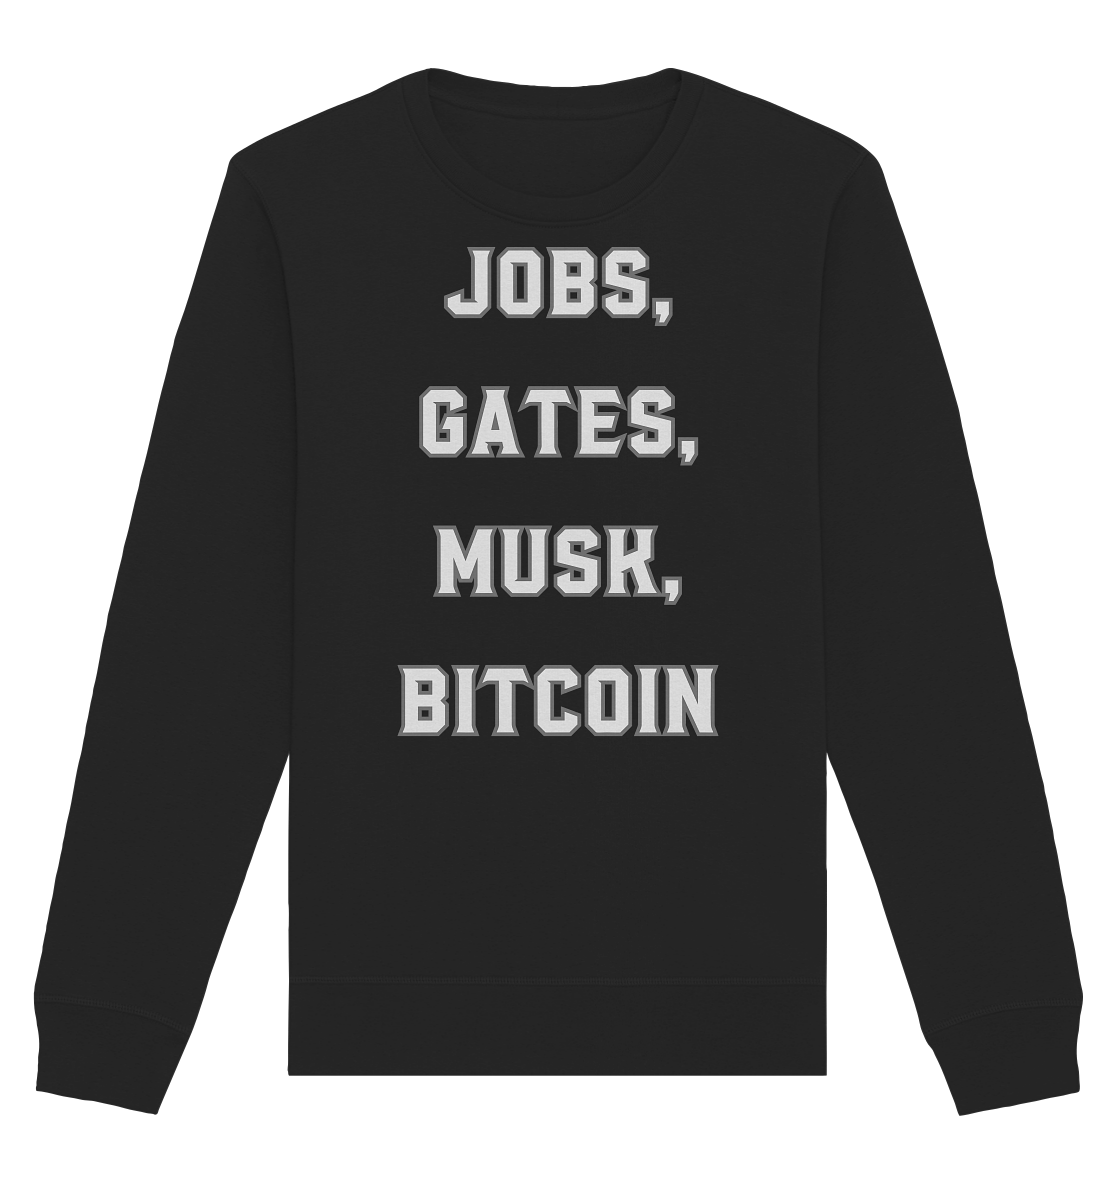 Steve Jobs, Bill Gates, Elon Musk, BITCOIN - Organic Basic Unisex Sweatshirt